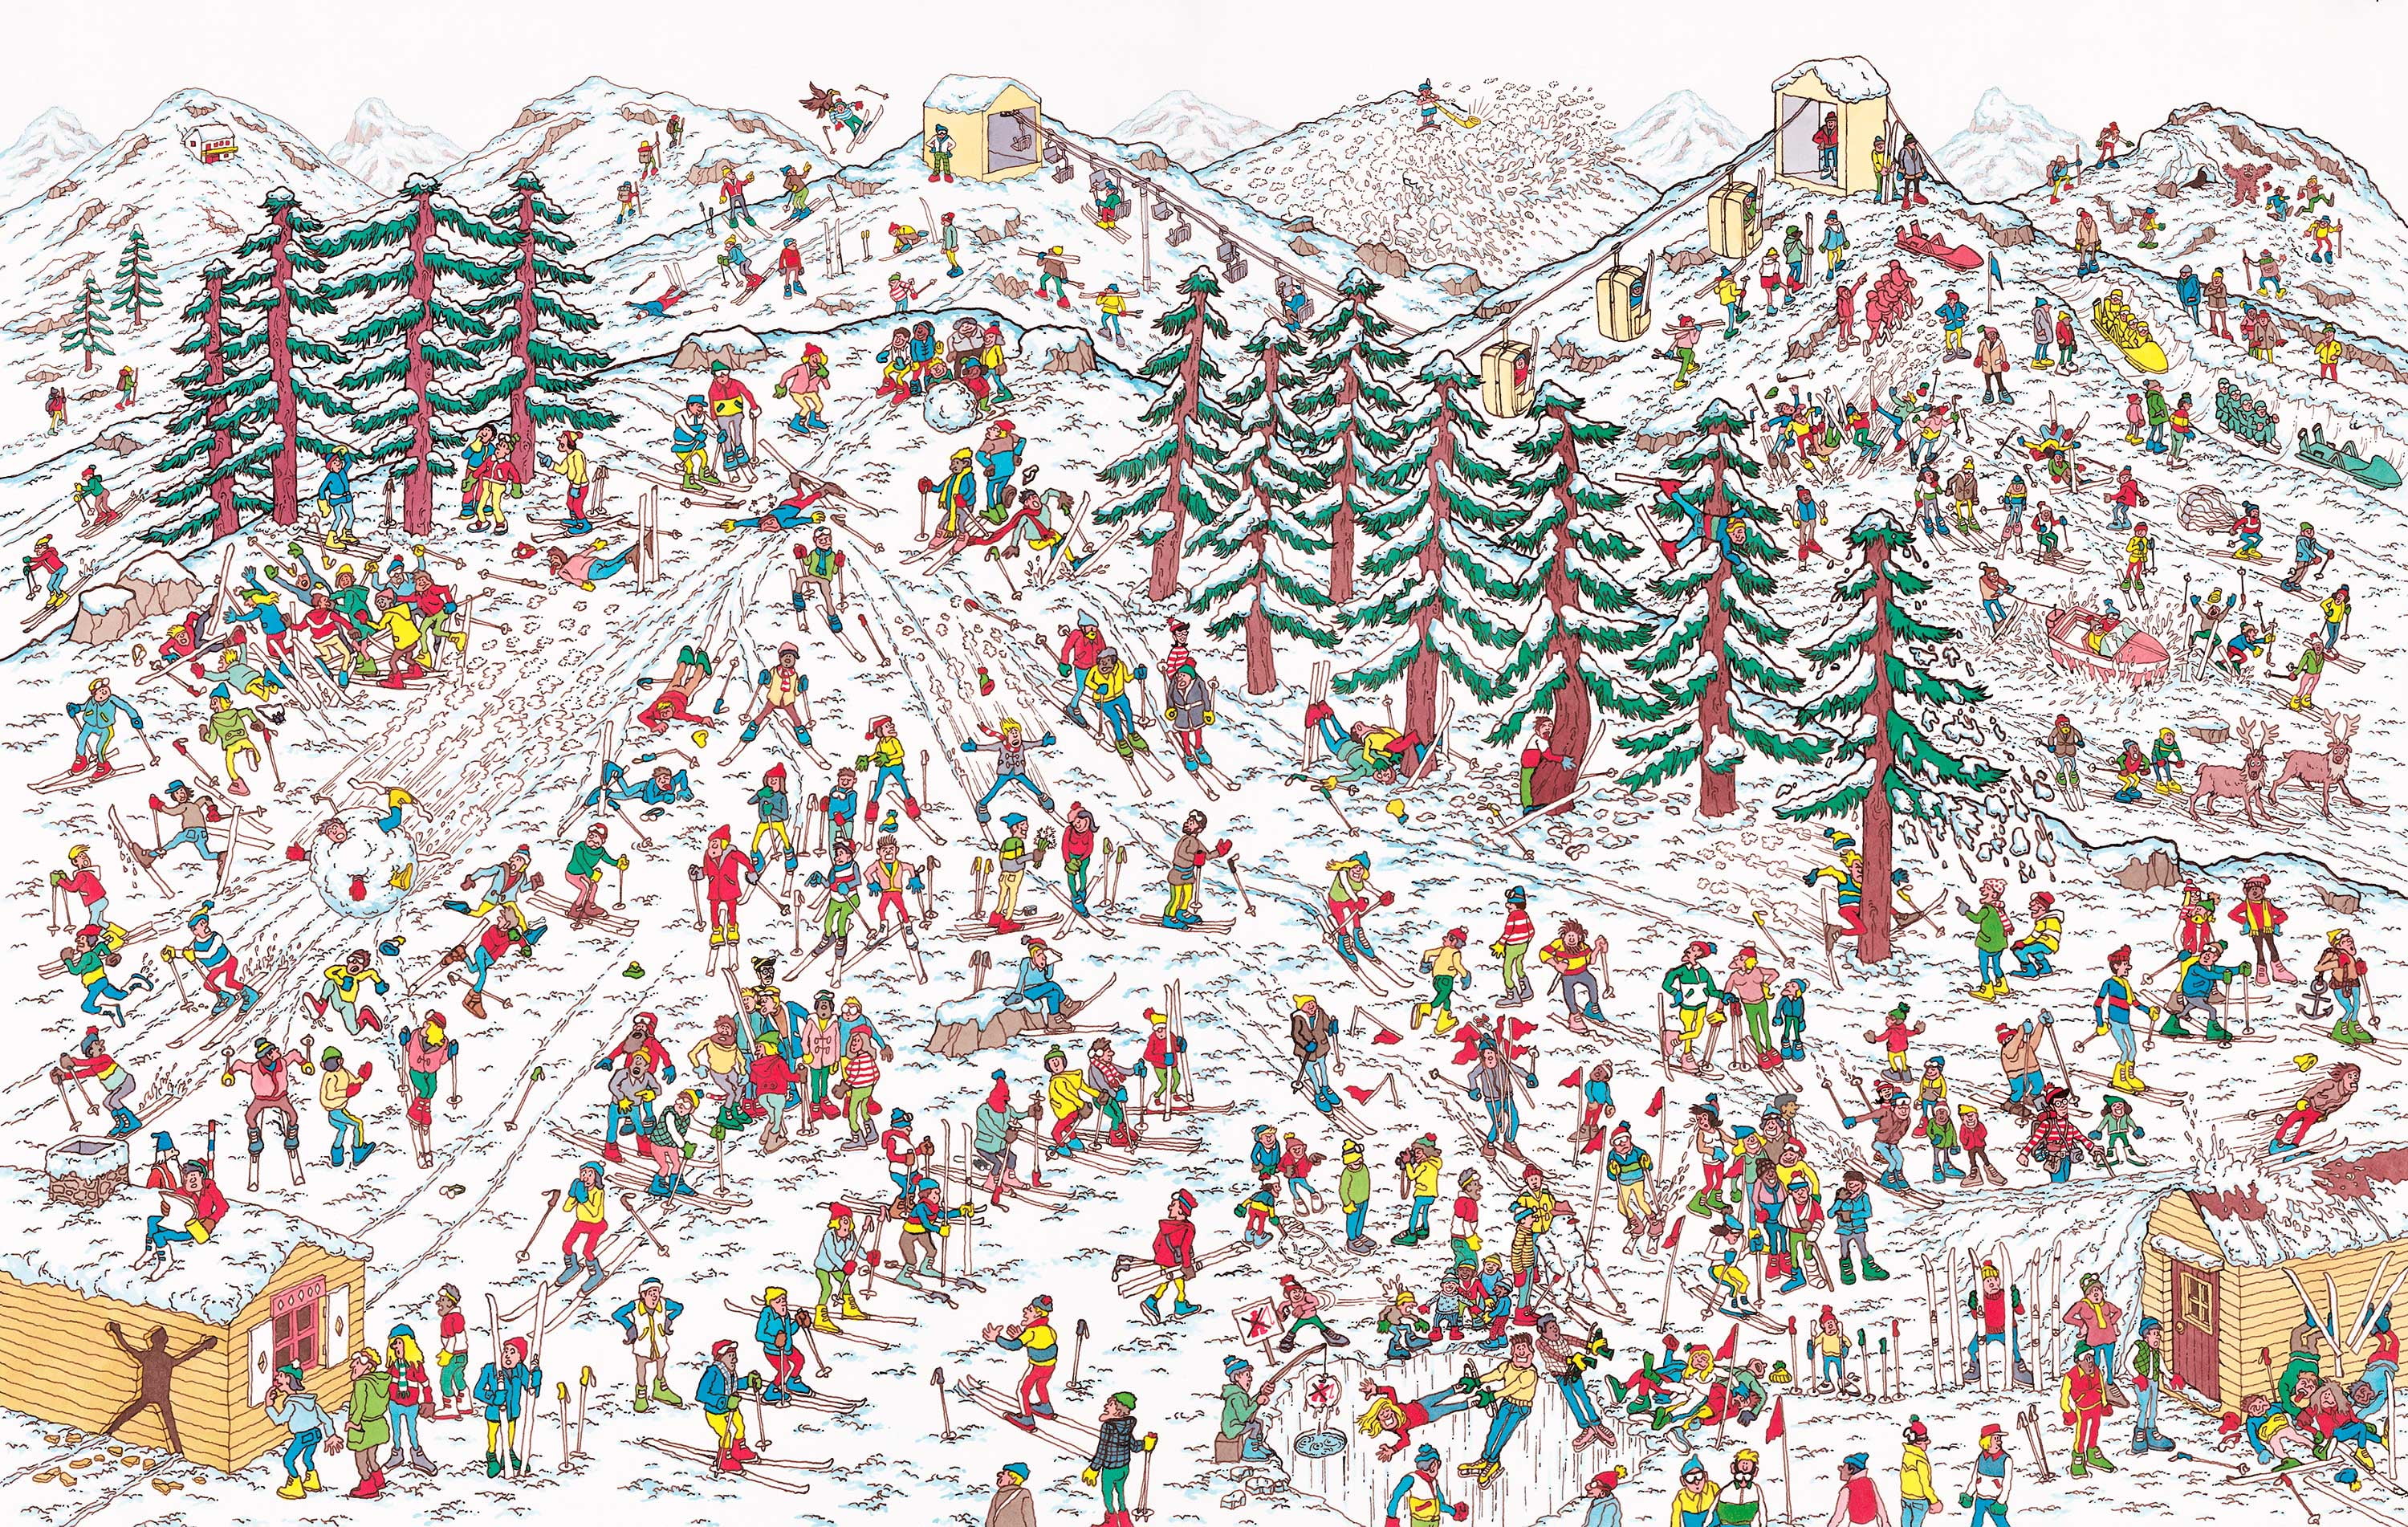 Waldo, cartoon, Where's Wally, multi colored, abundance, large group of objects